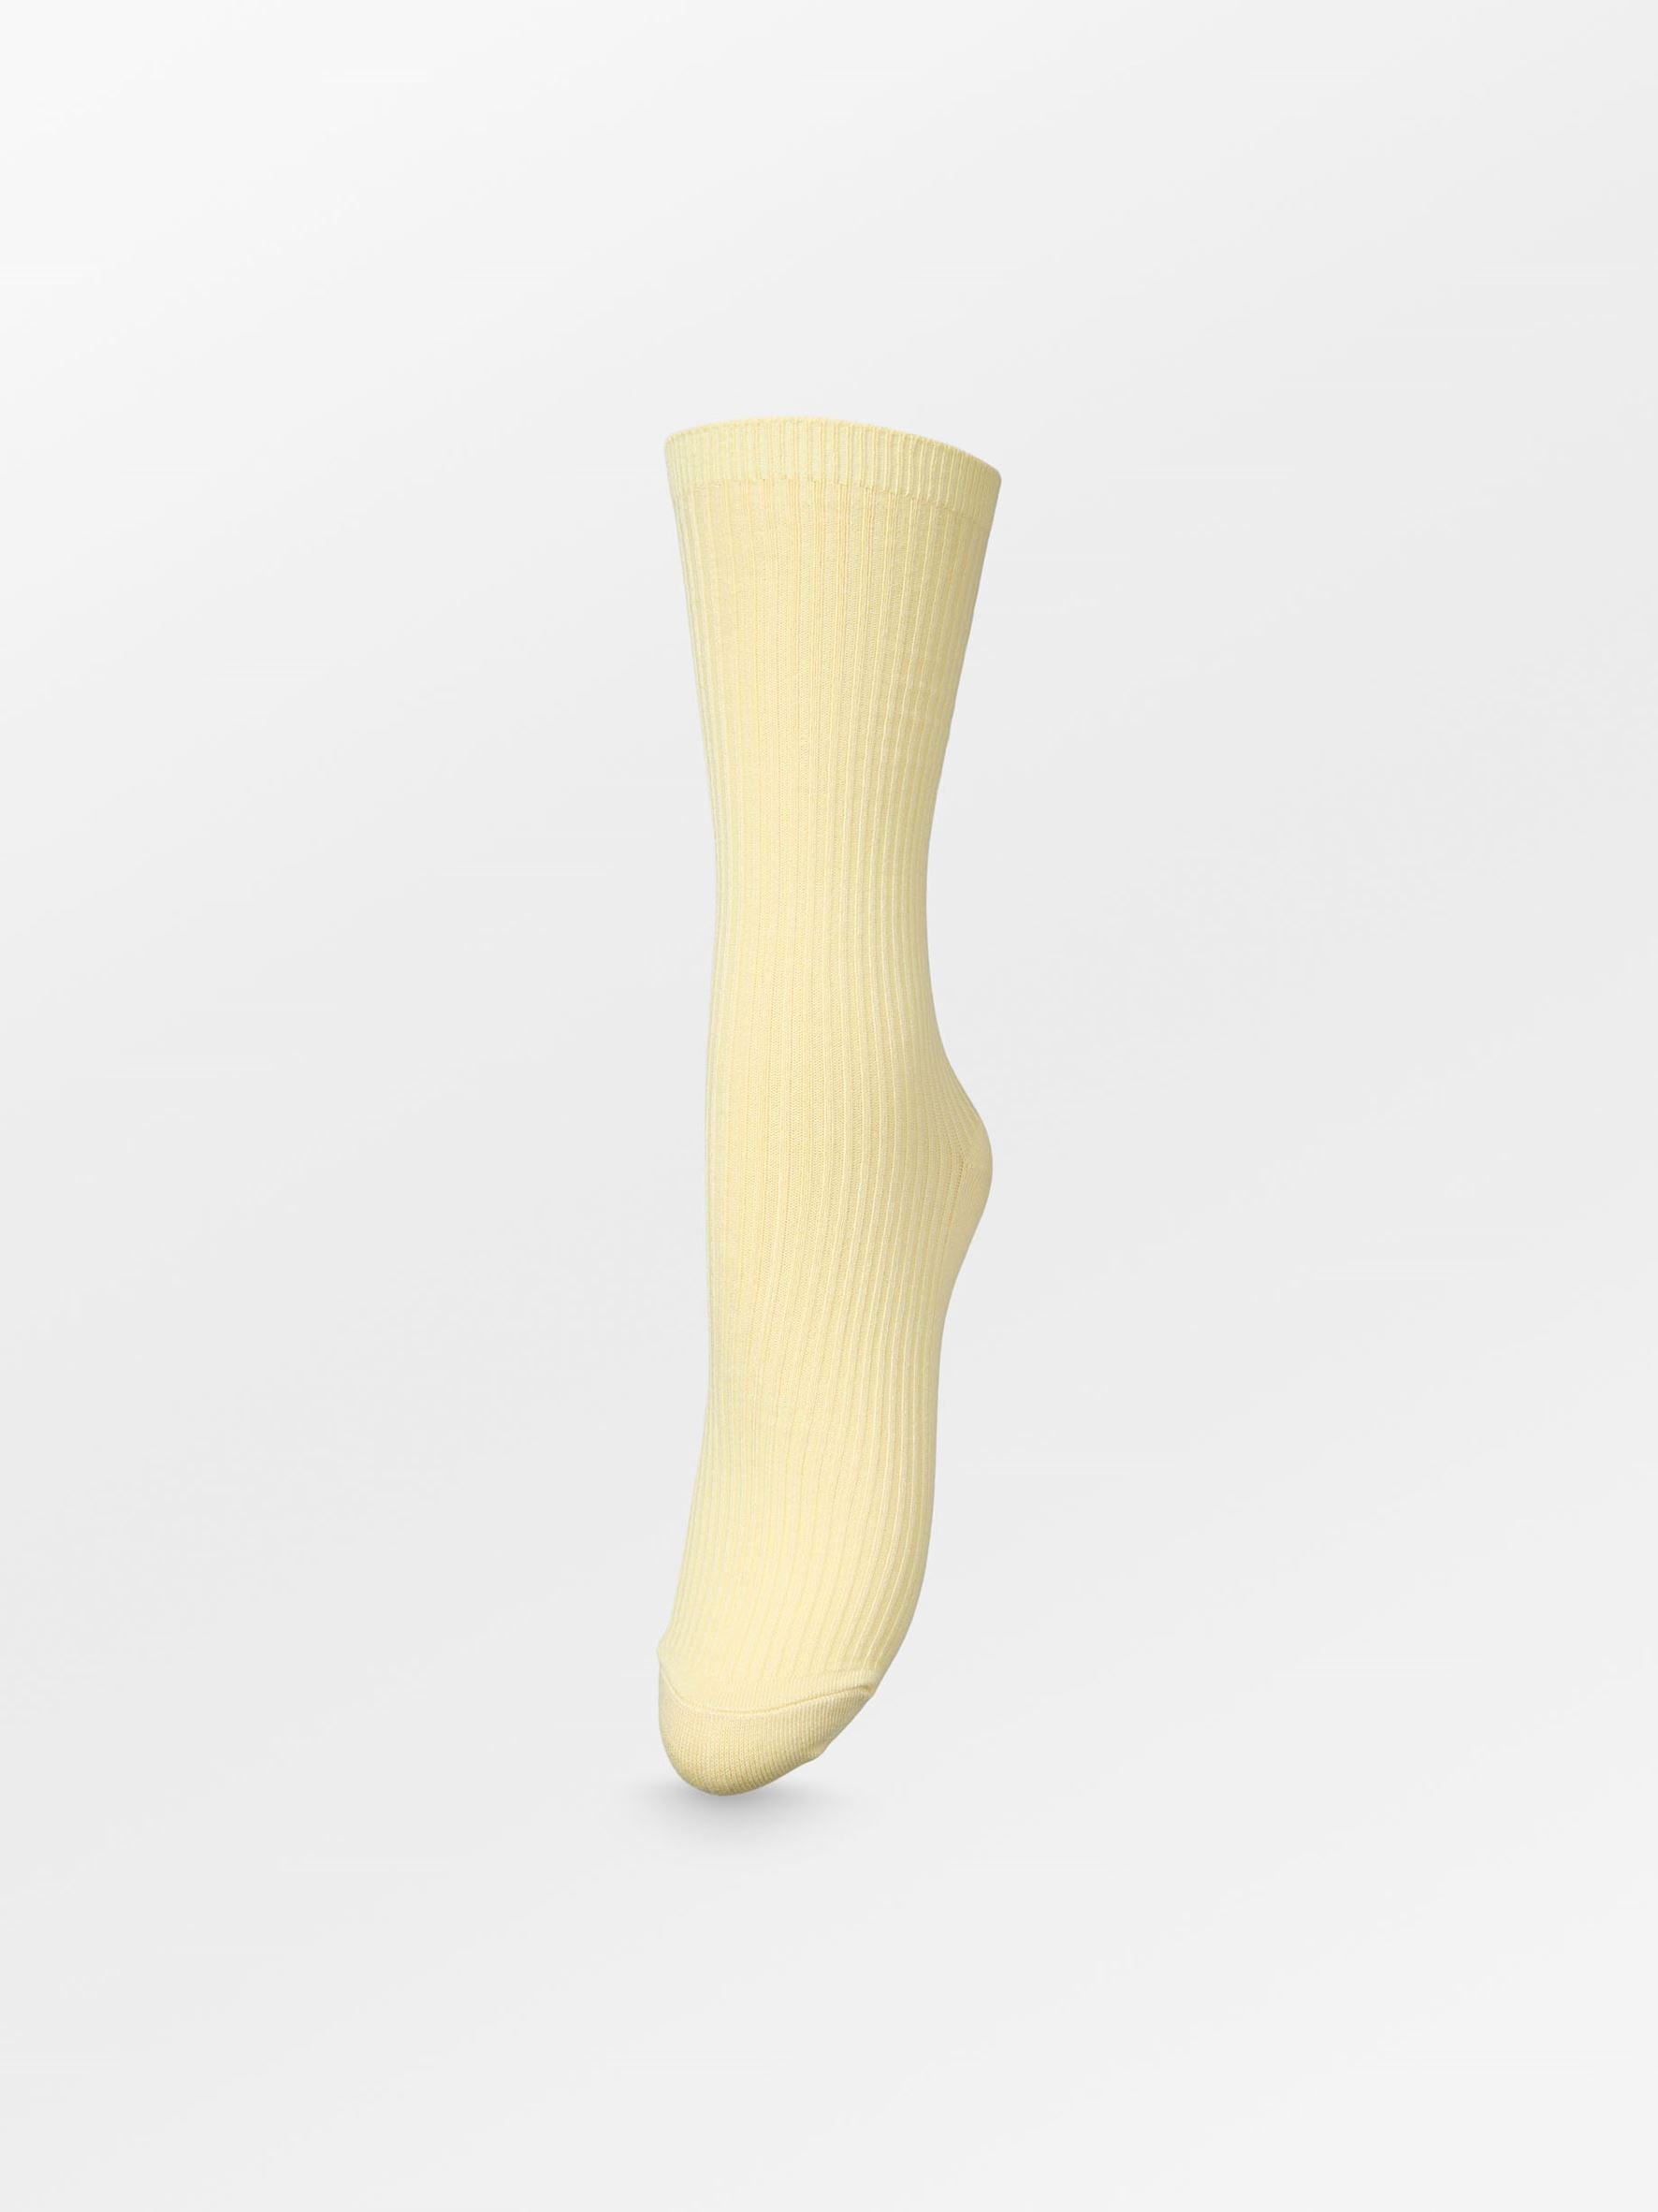 Becksöndergaard, Telma Solid Sock - French Vanilla, socks, gifts, socks